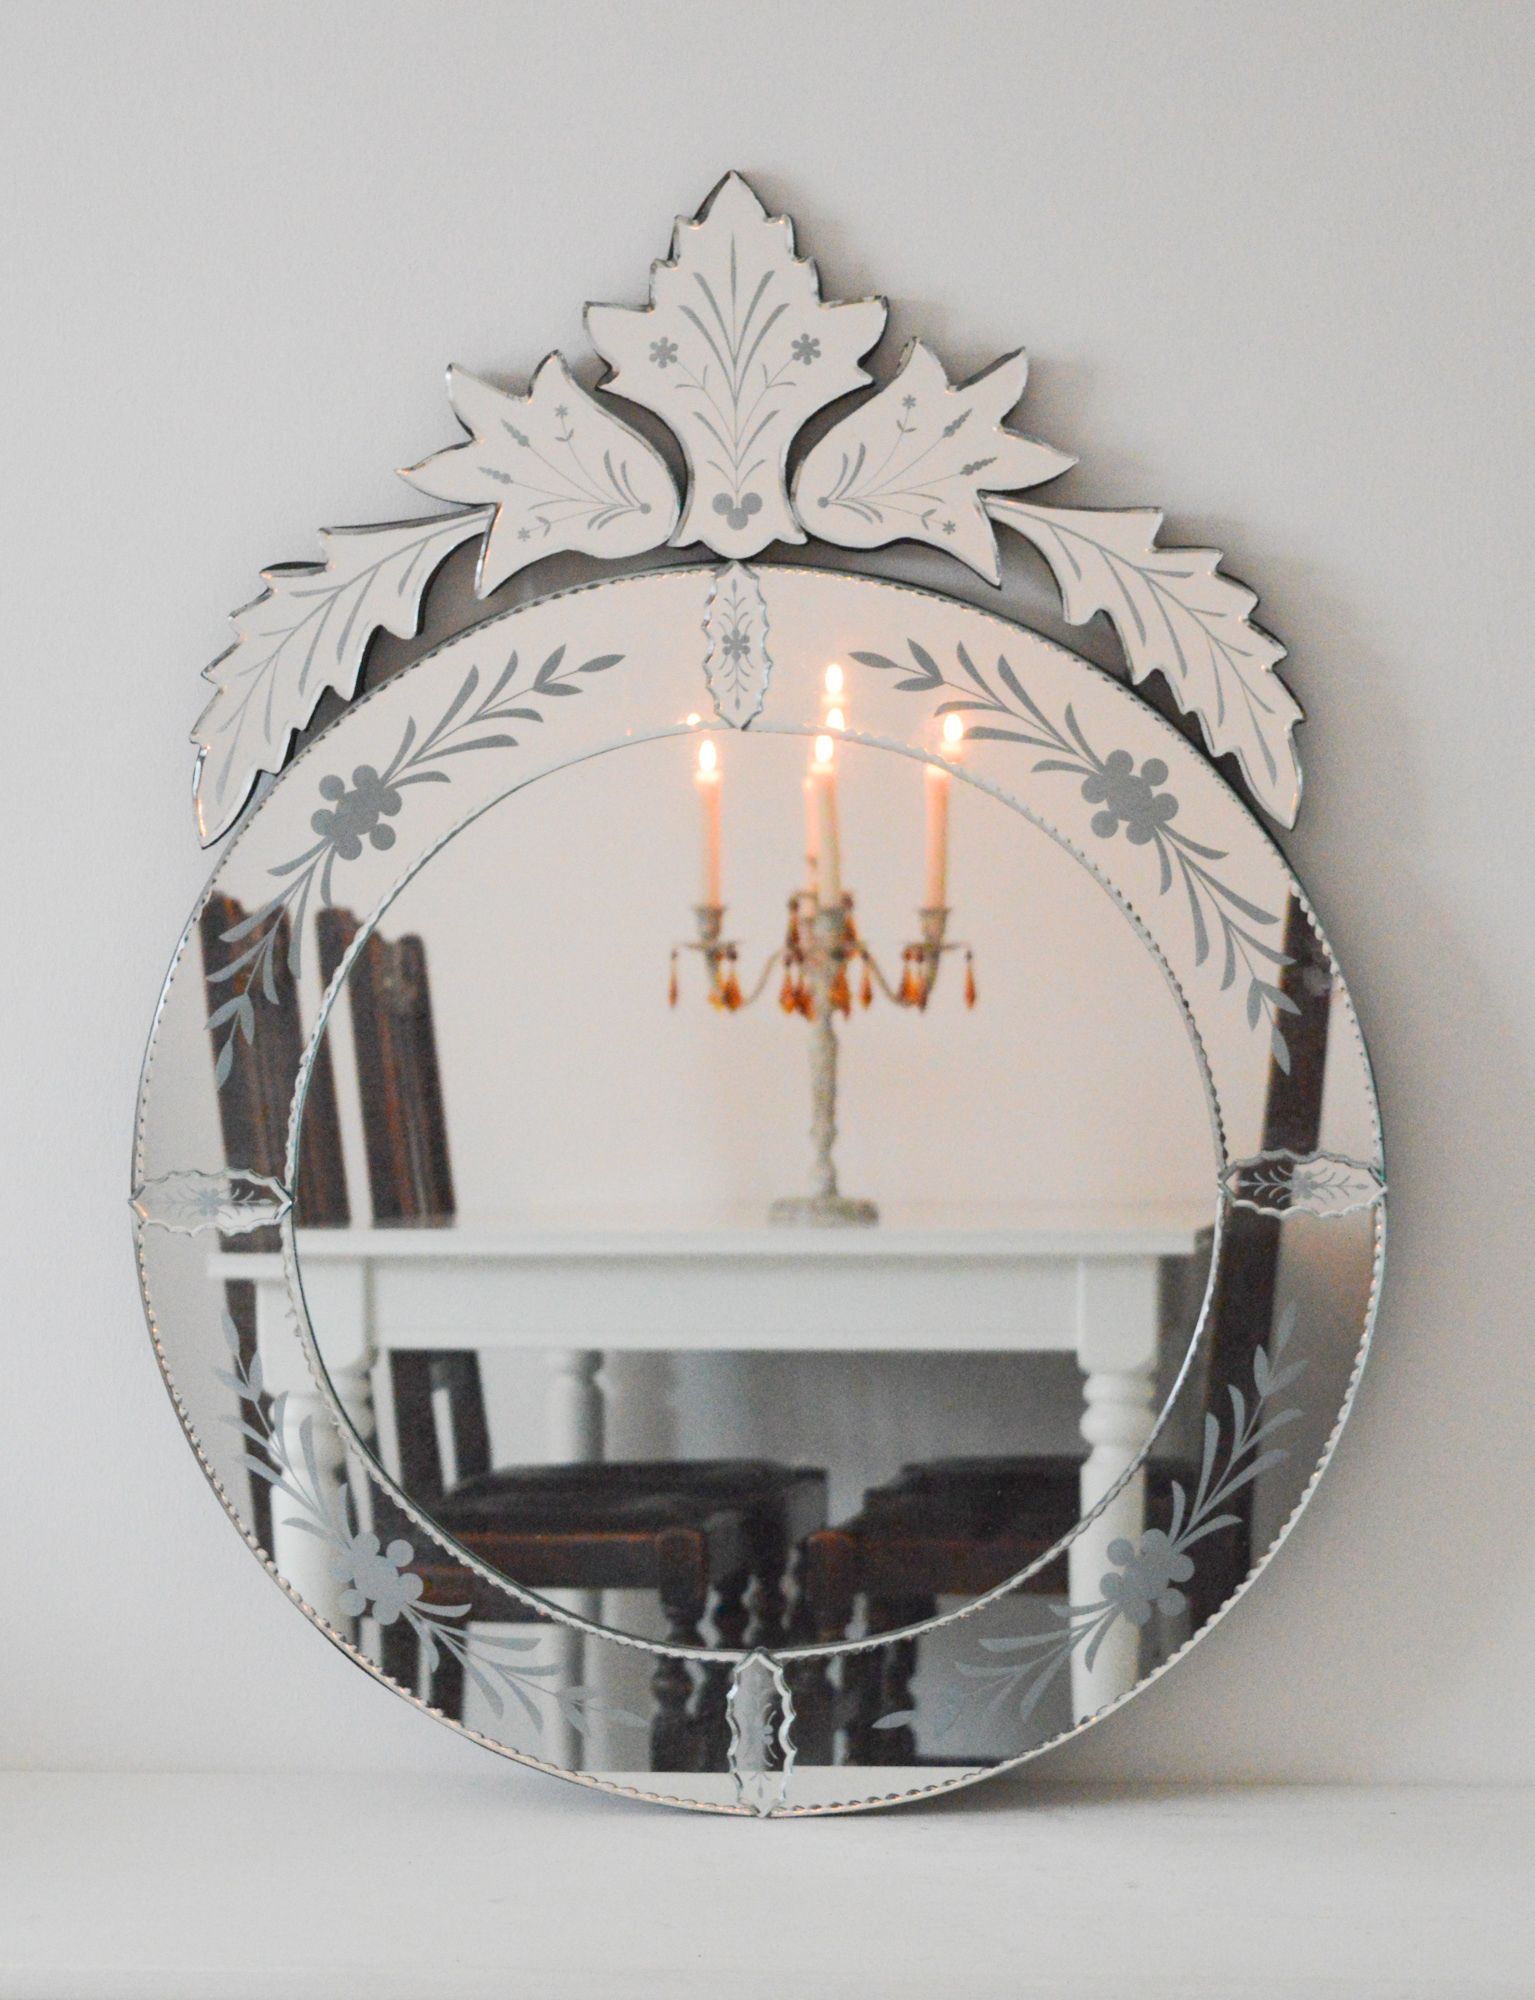 Vintage Venetian Style Wall Mirror, Large Round Decorative Mirror Pertaining To Matthias Round Accent Mirrors (View 13 of 15)